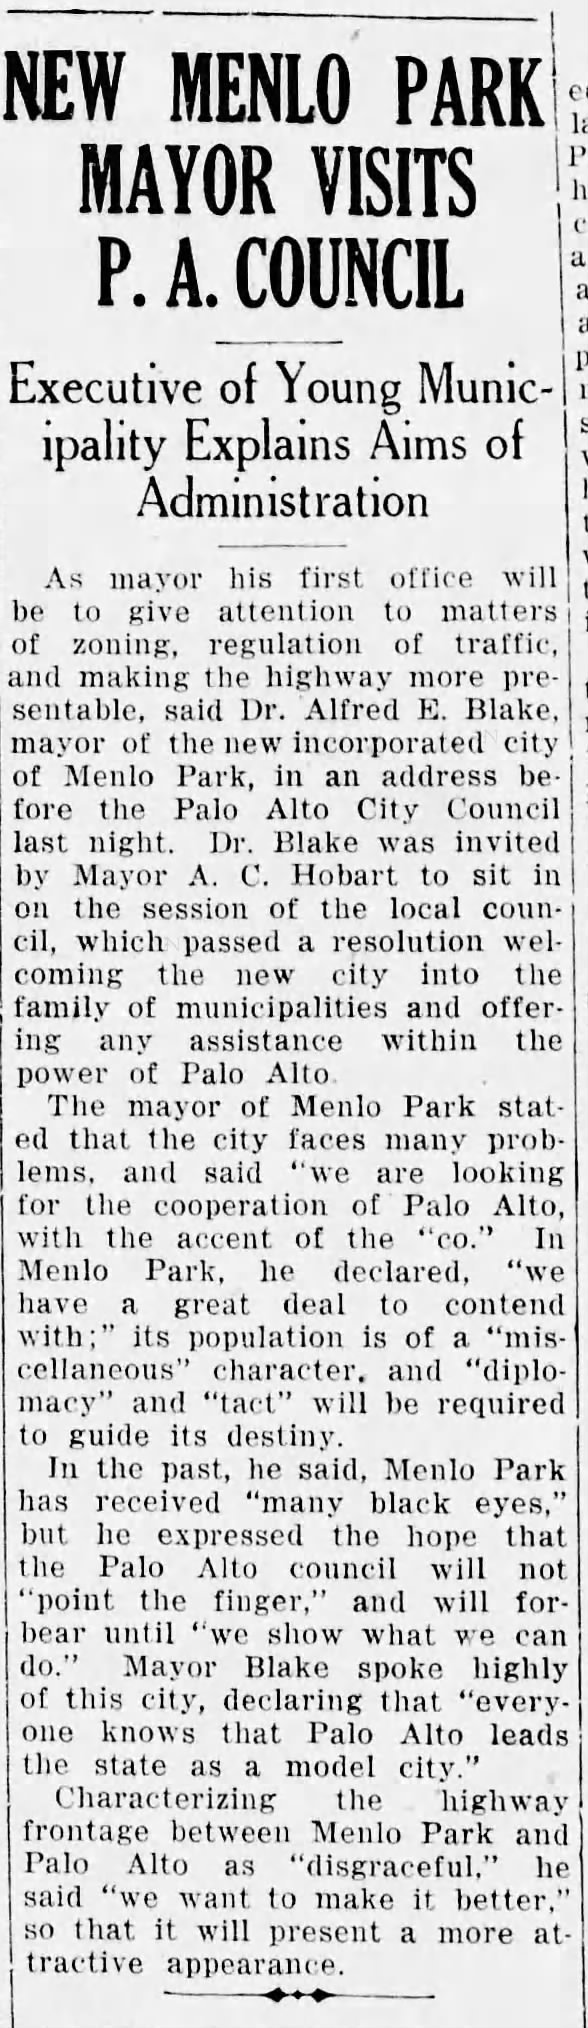 New Menlo Park Mayor Visits P.A. Council